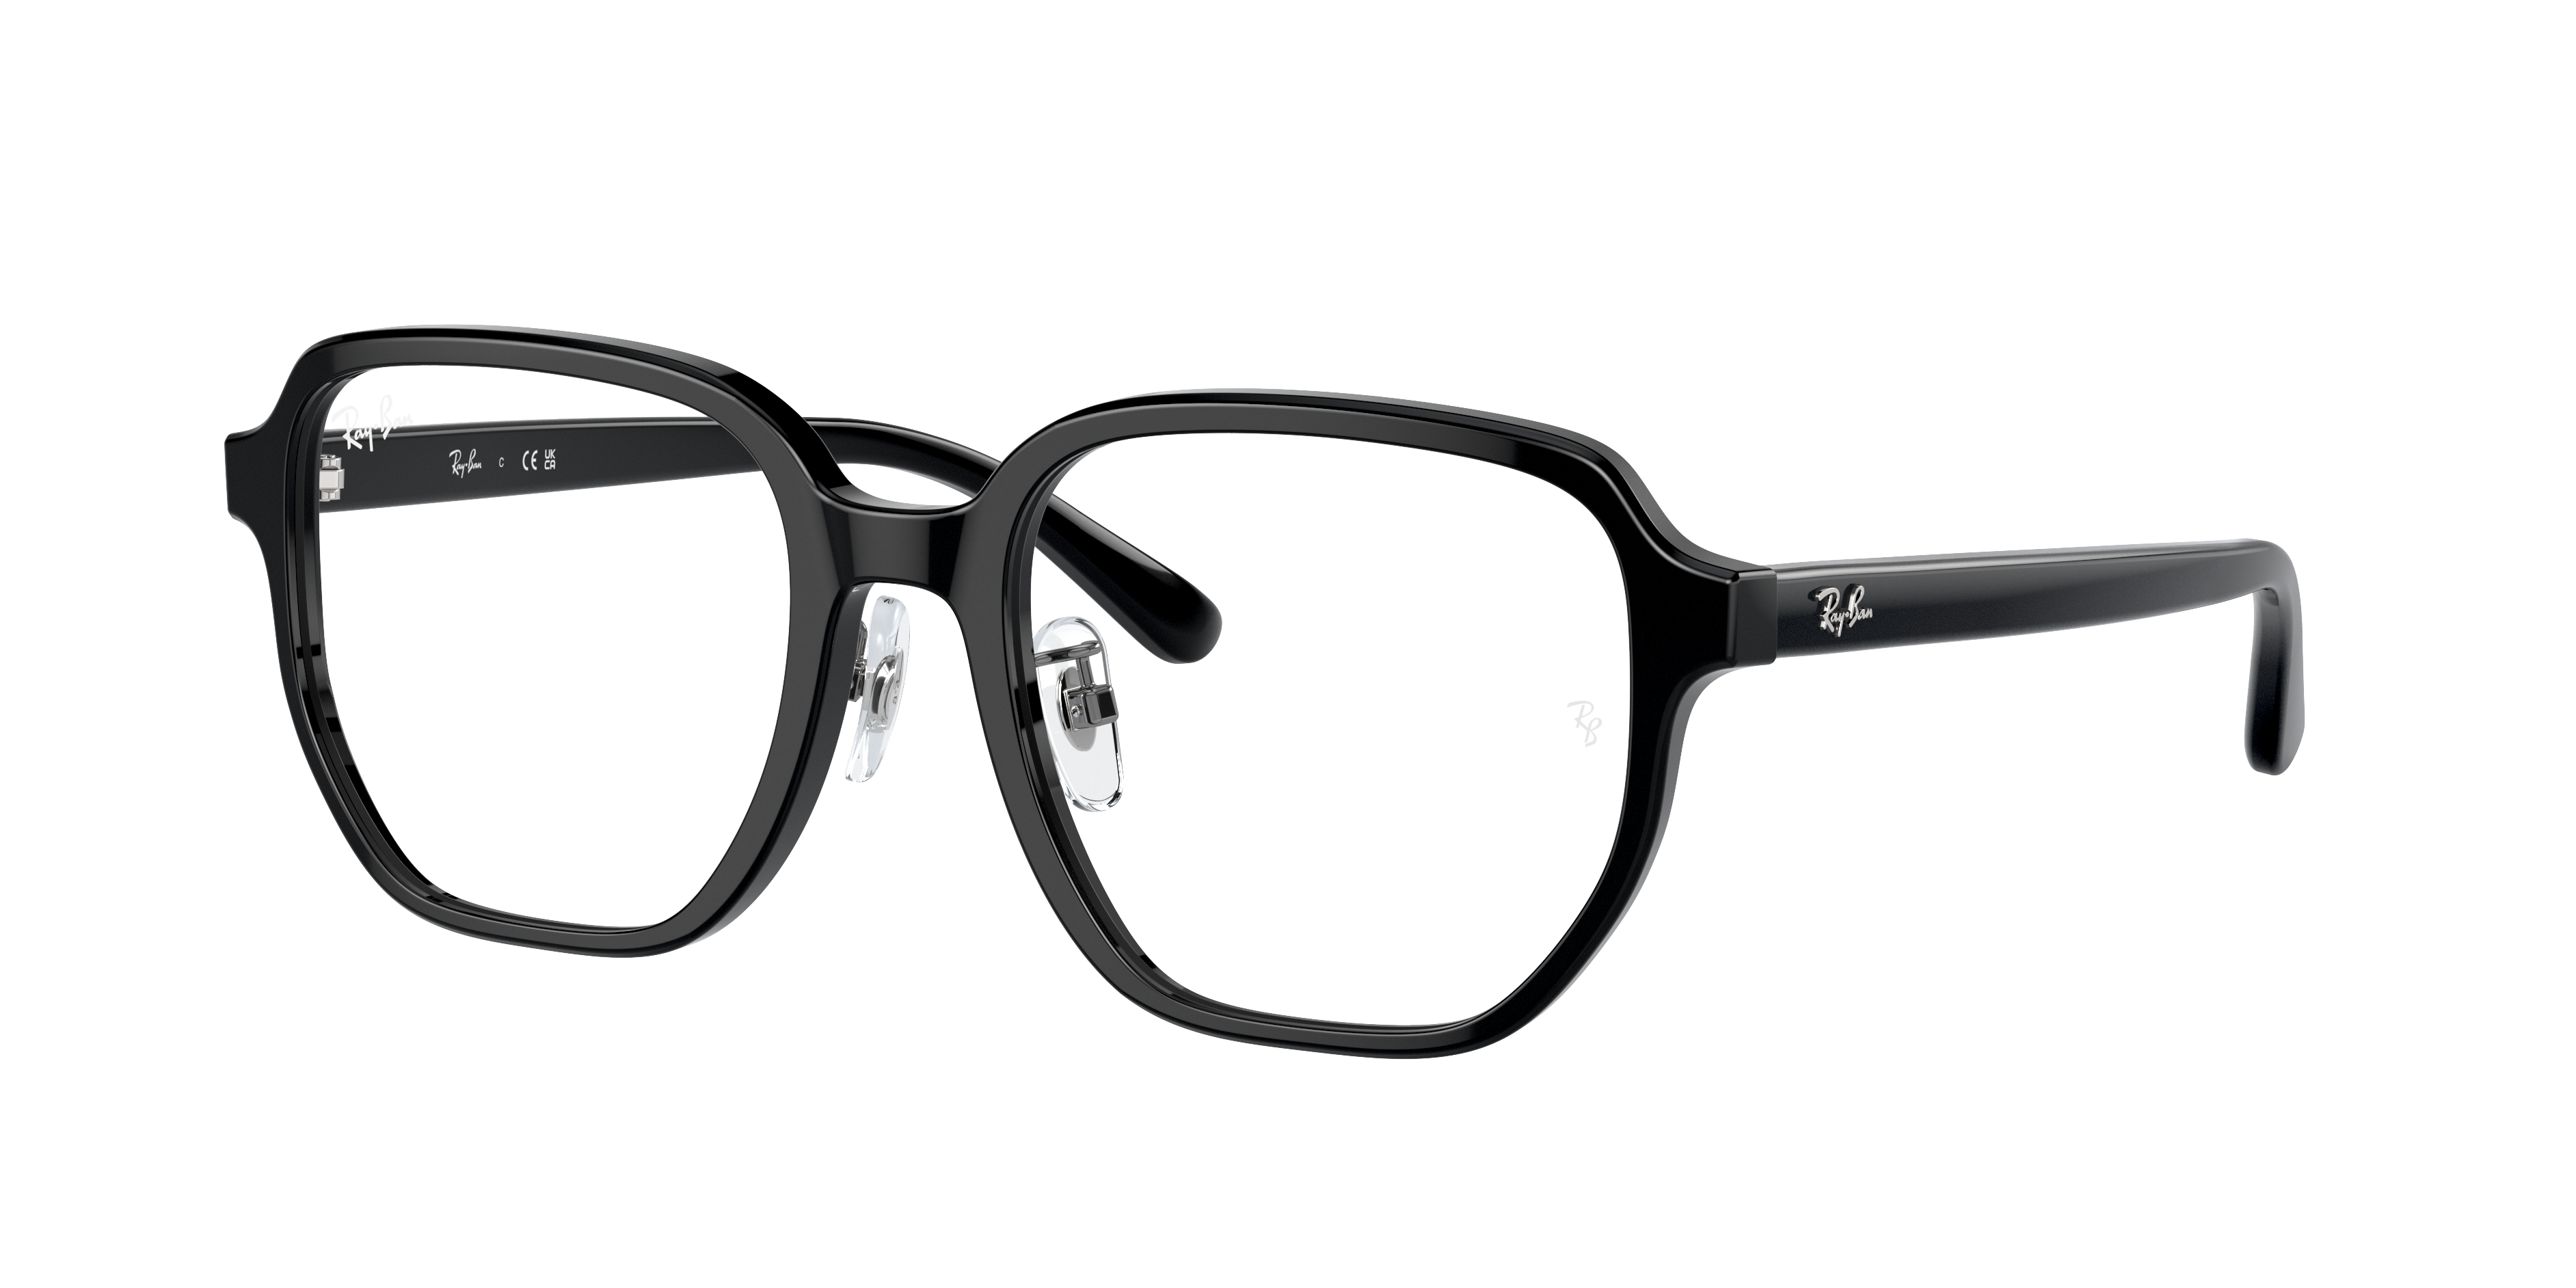 Rb5424d Optics Eyeglasses with Black Frame - RB5424D | Ray-Ban®